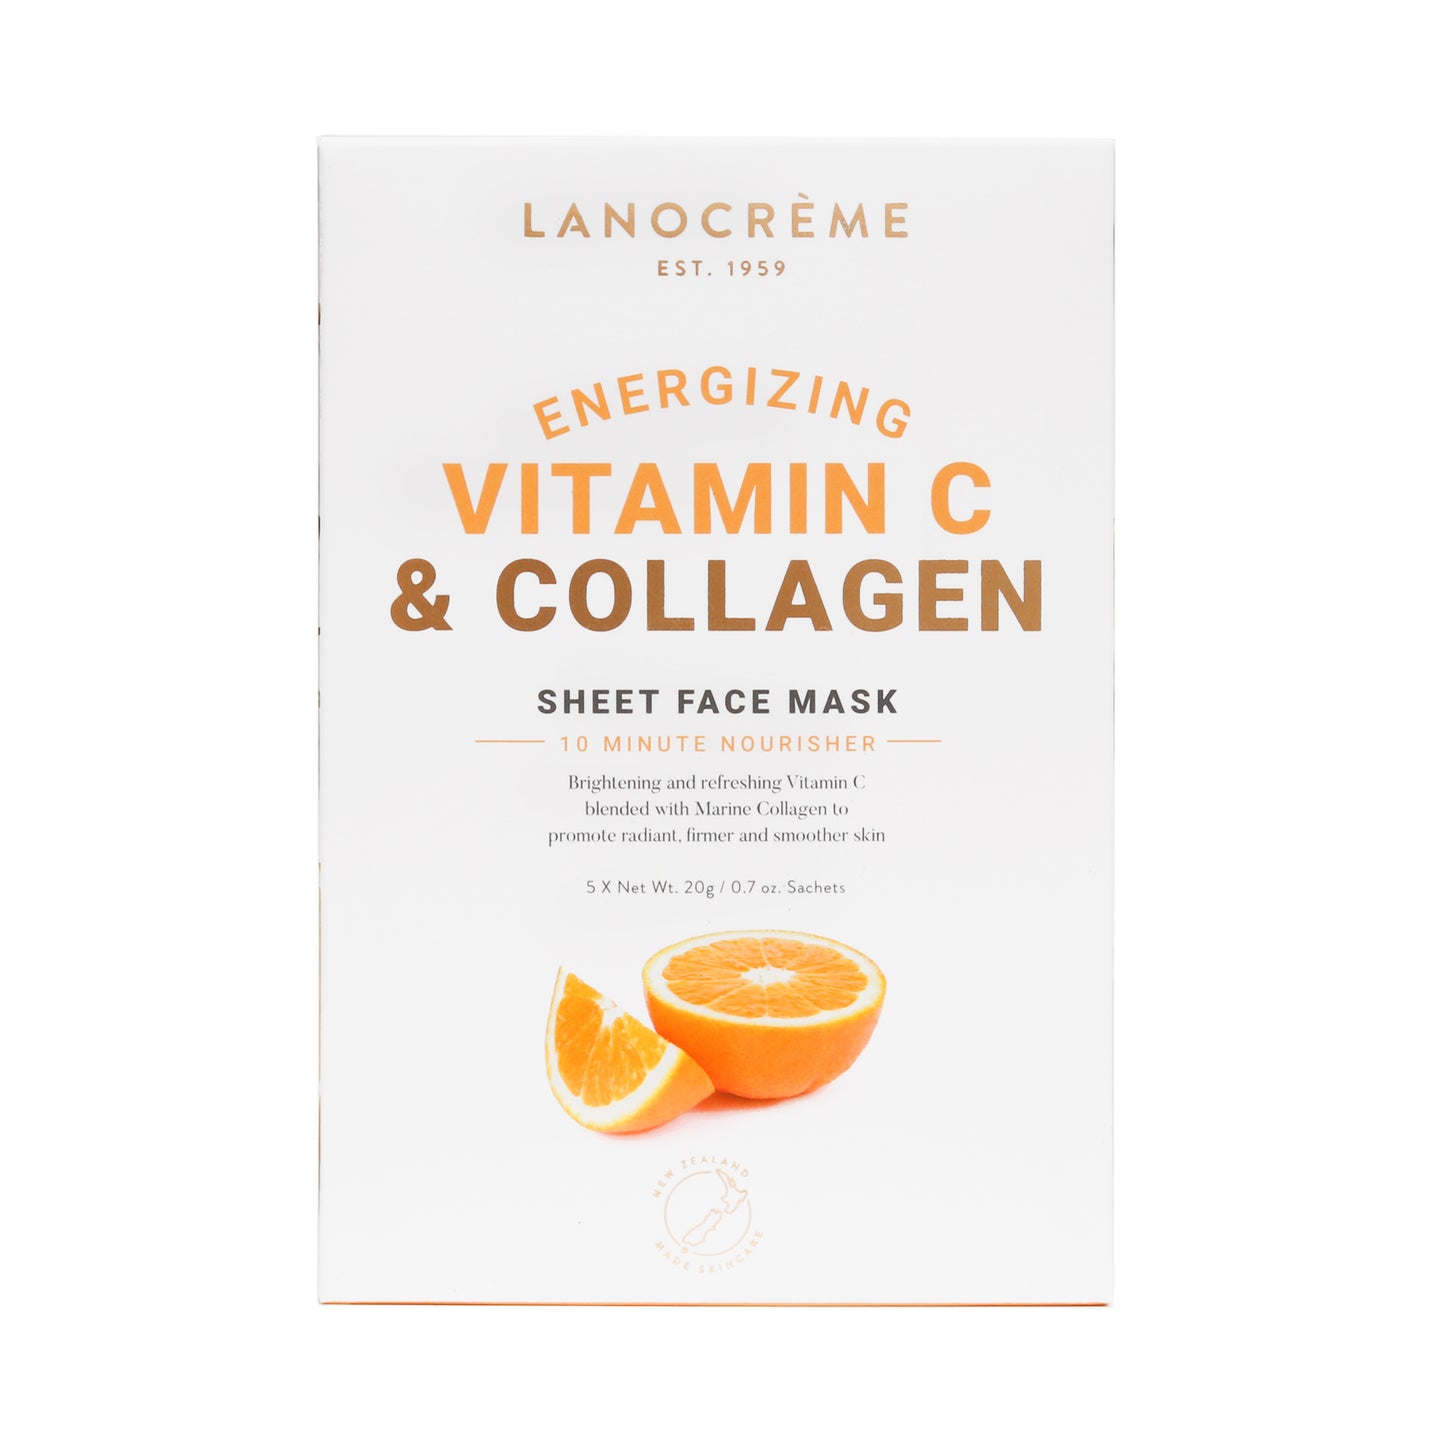 Energizing Vitamin C & Collagen Sheet Face Mask